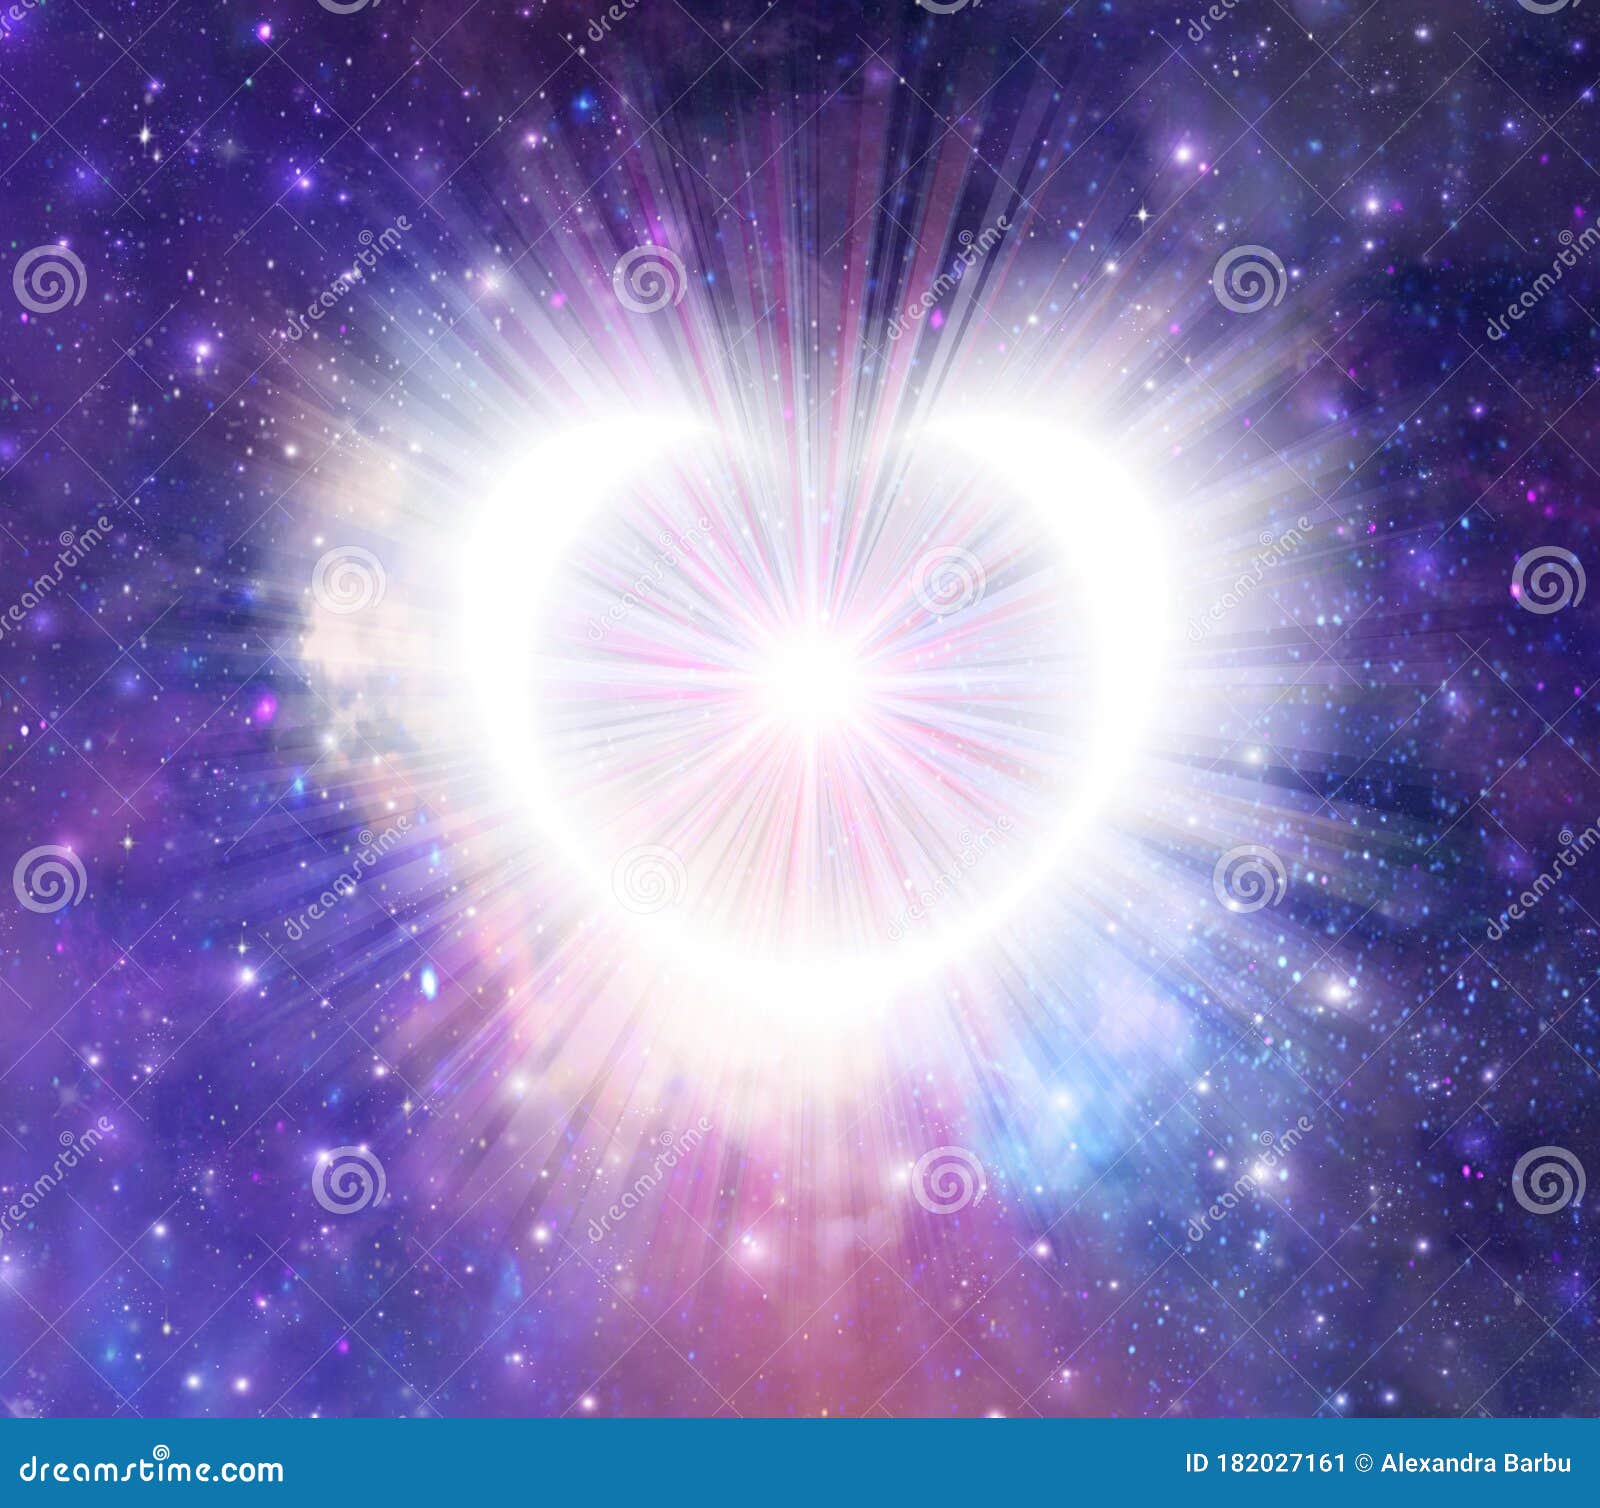 glowing universal heart portal, infinite love, life, source, soul journey through universe doorway